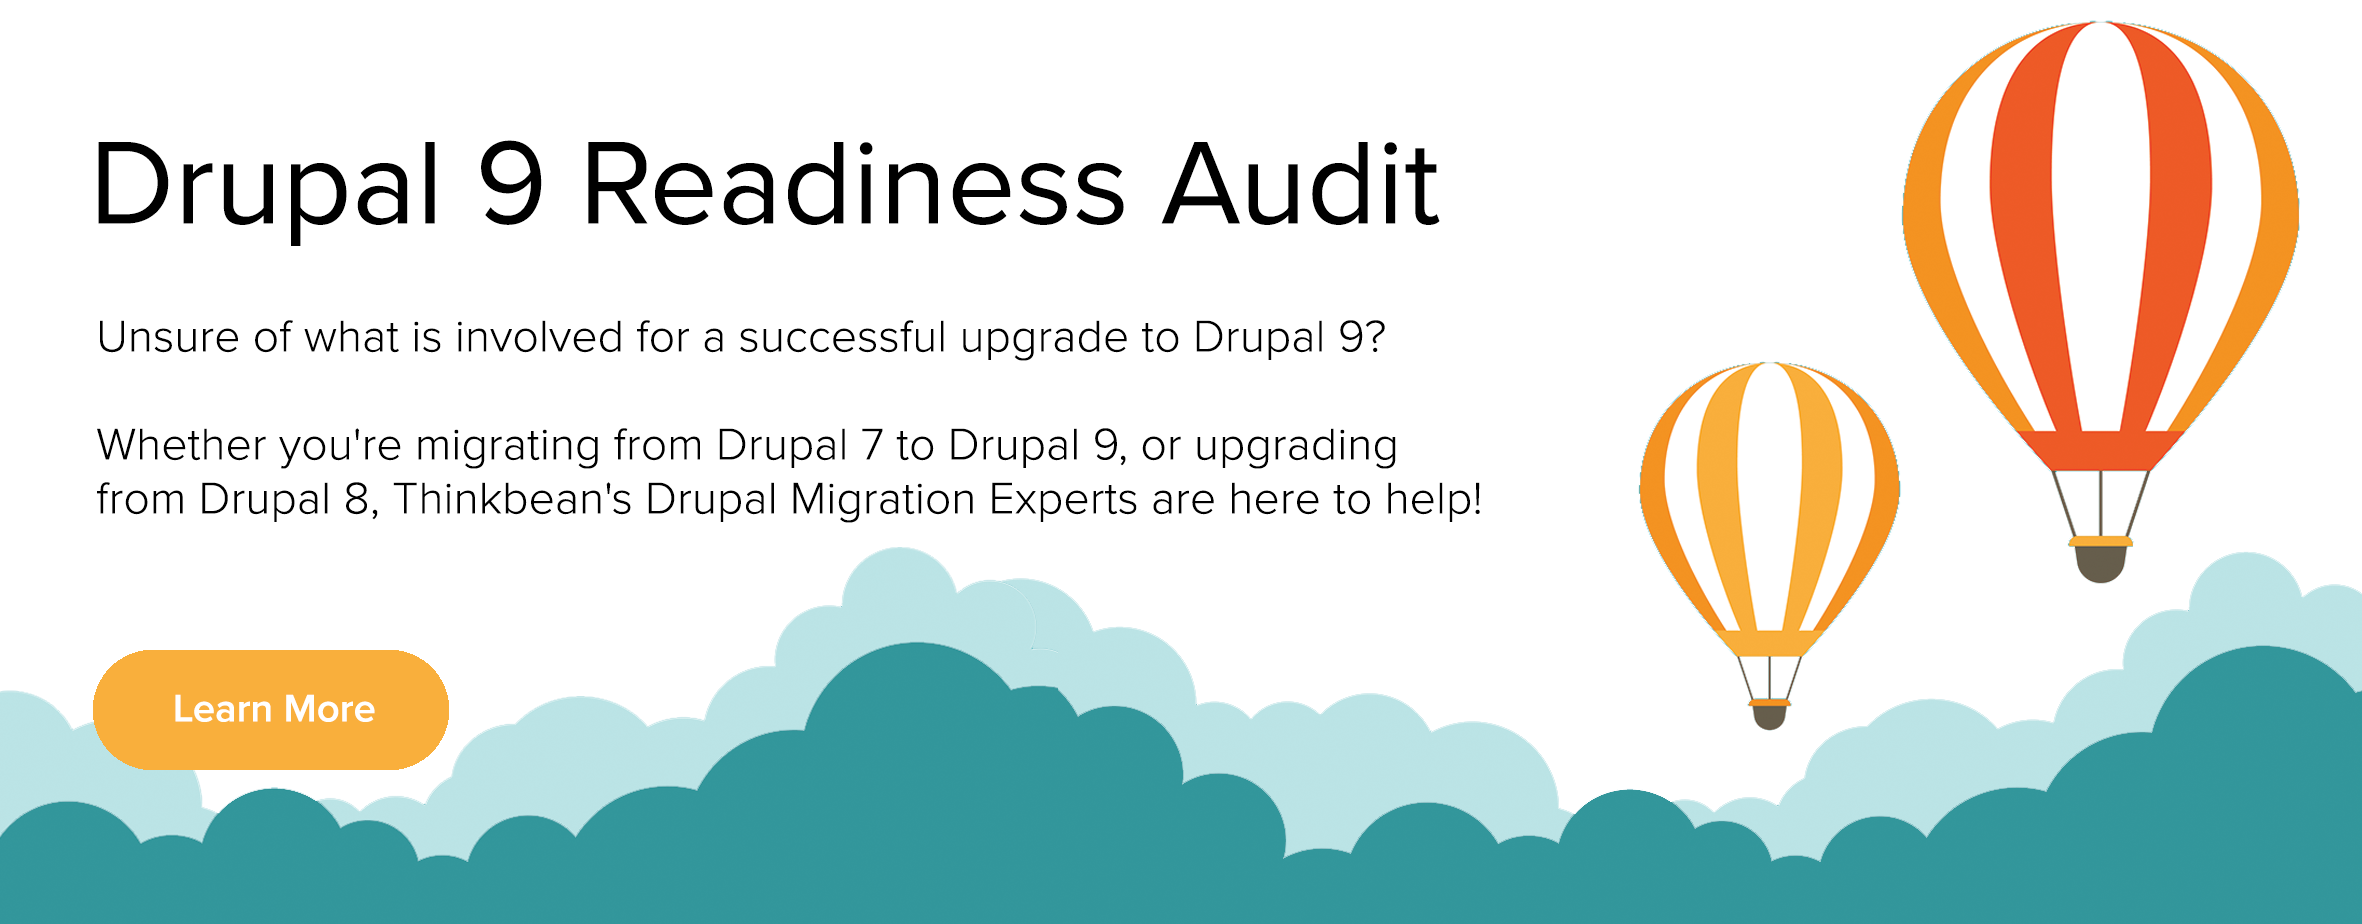 Drupal 9 Readiness Audit 